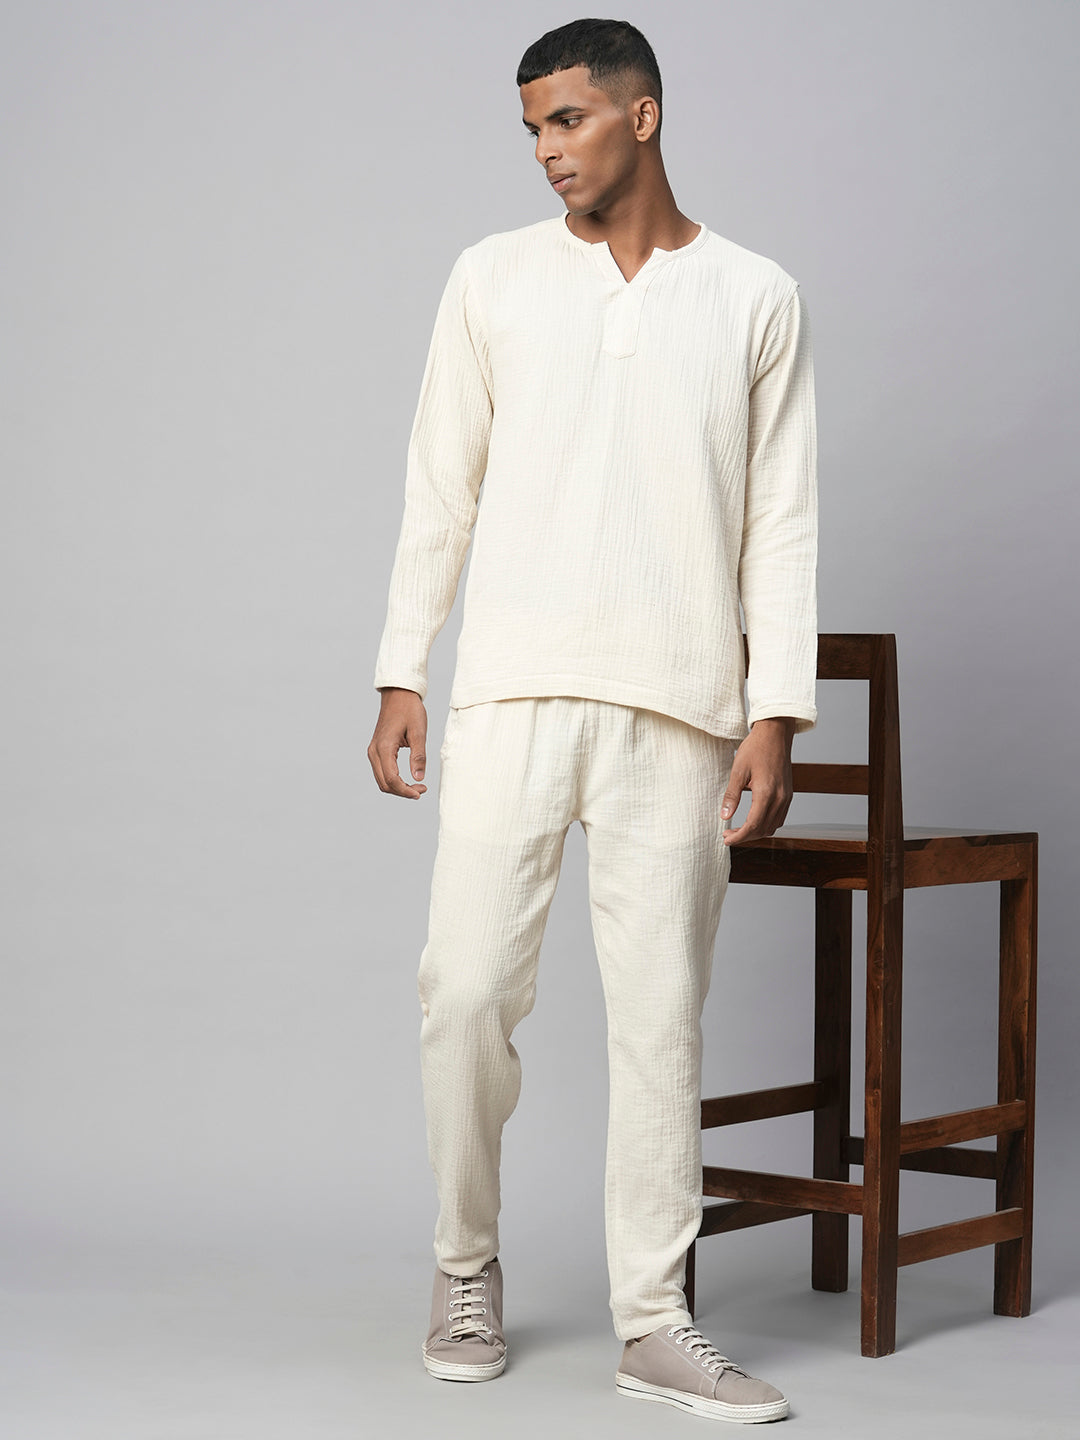 Men's Offwhite Cotton Regular Fit Kurta Shirt